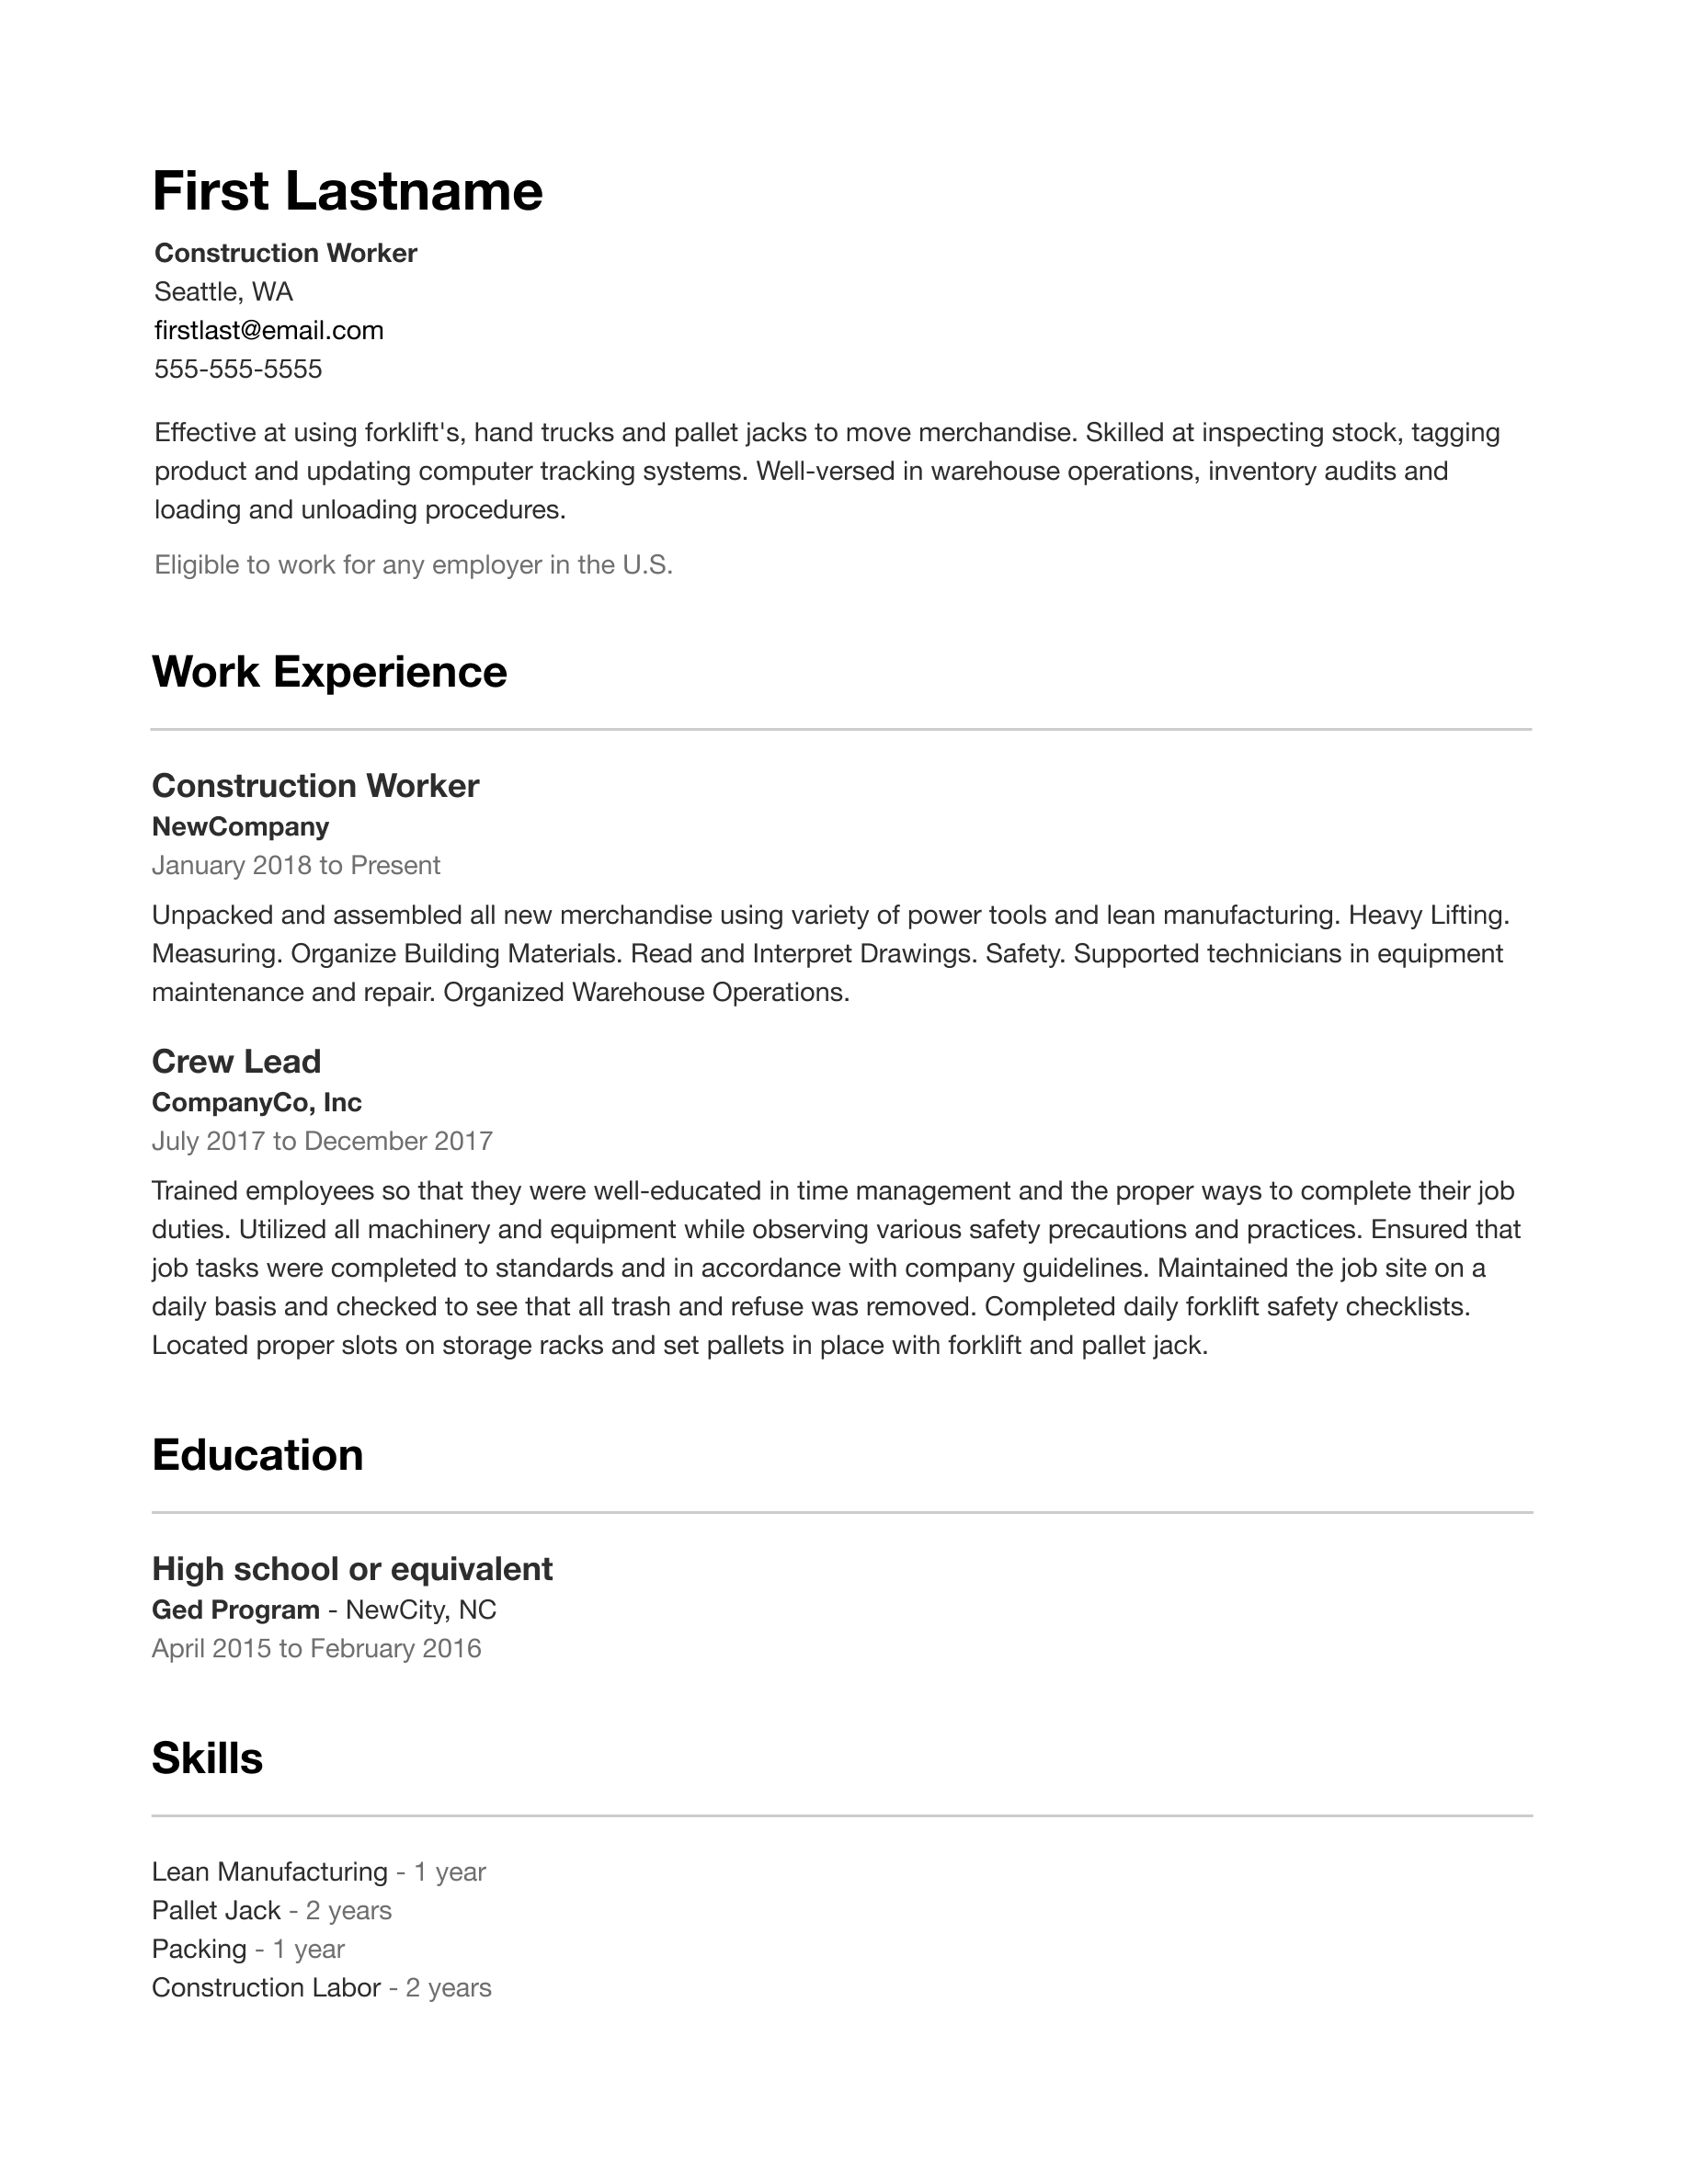 Free Professional Resume Templates